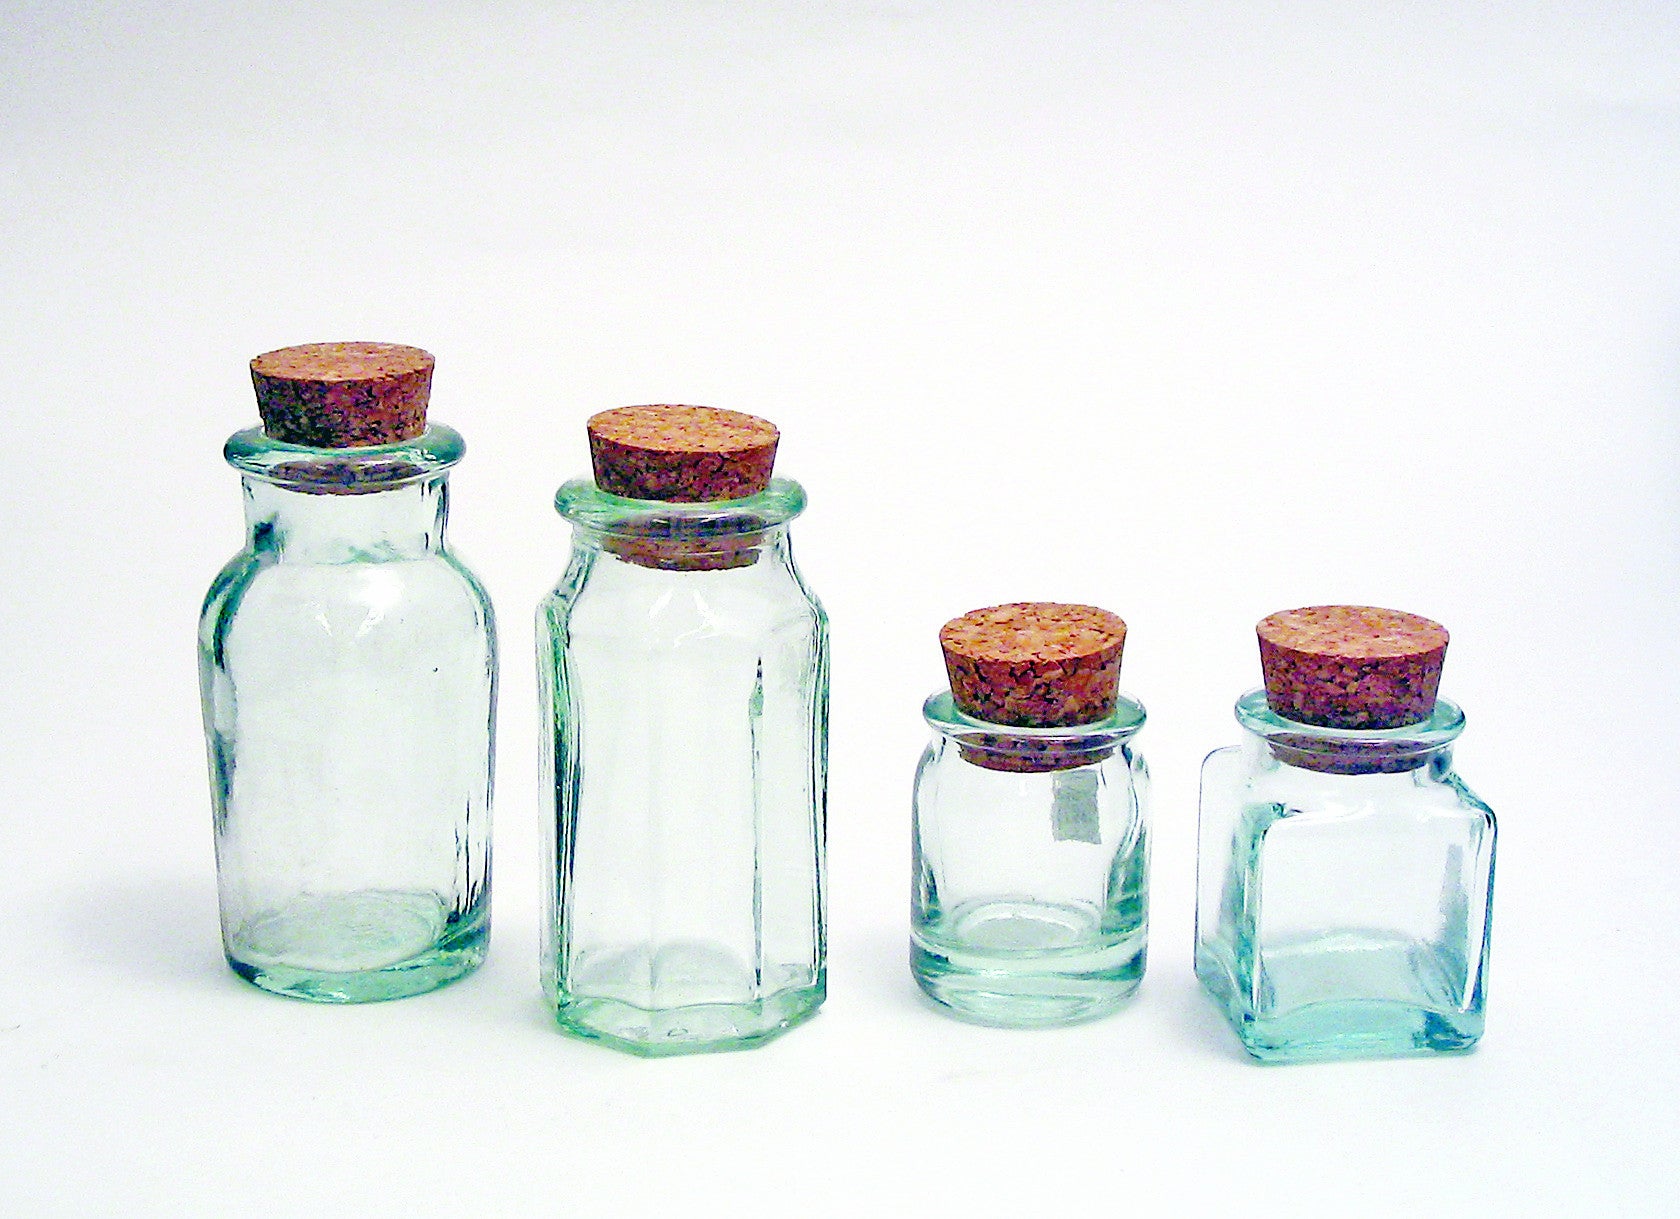 RECYCLED GLASS Jar 8l | Cork Lid | Storage or terrarium | Eco-friendly Gift